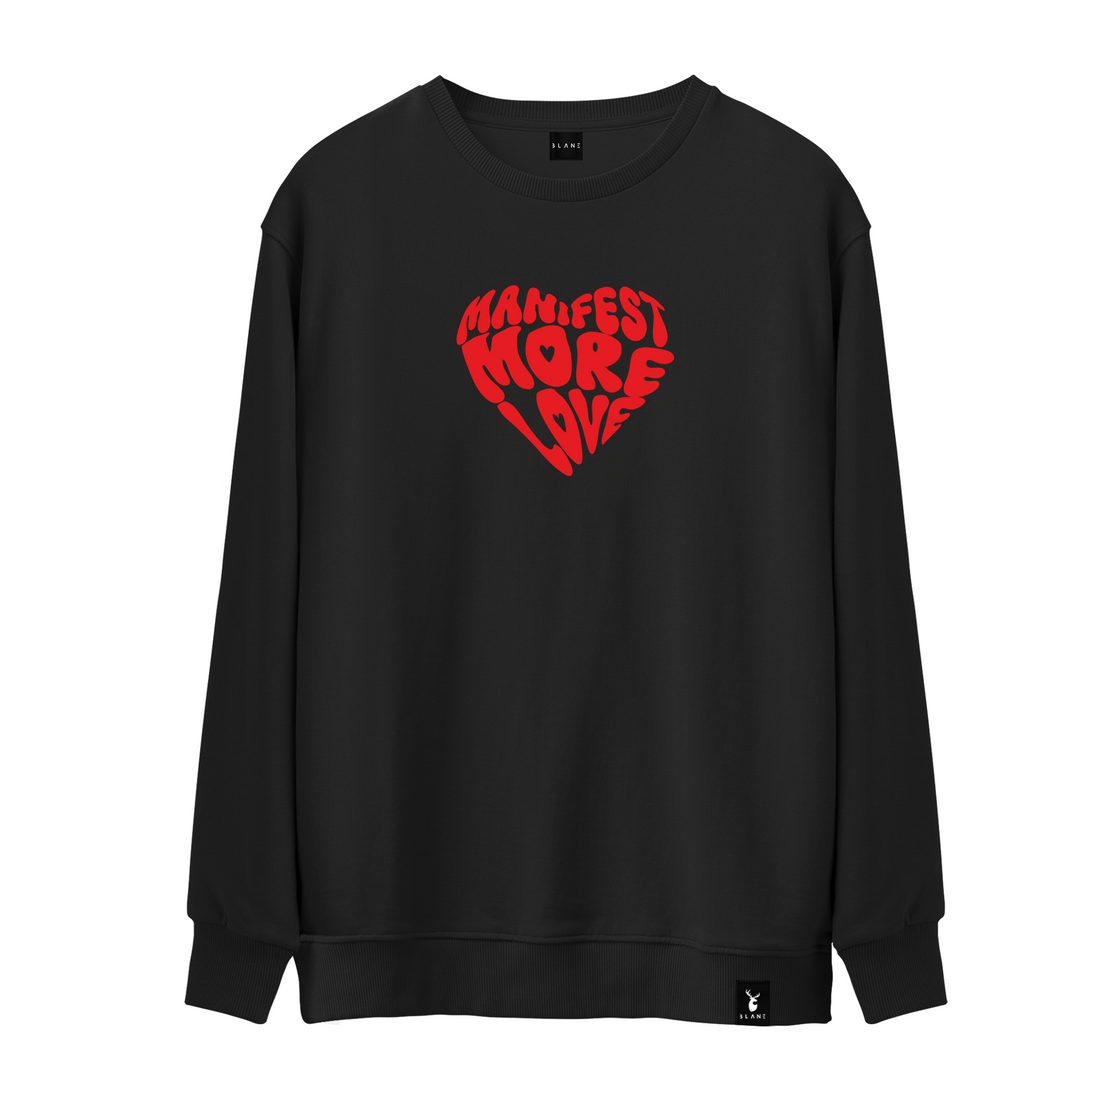 Manifest More Love - Sweatshirt